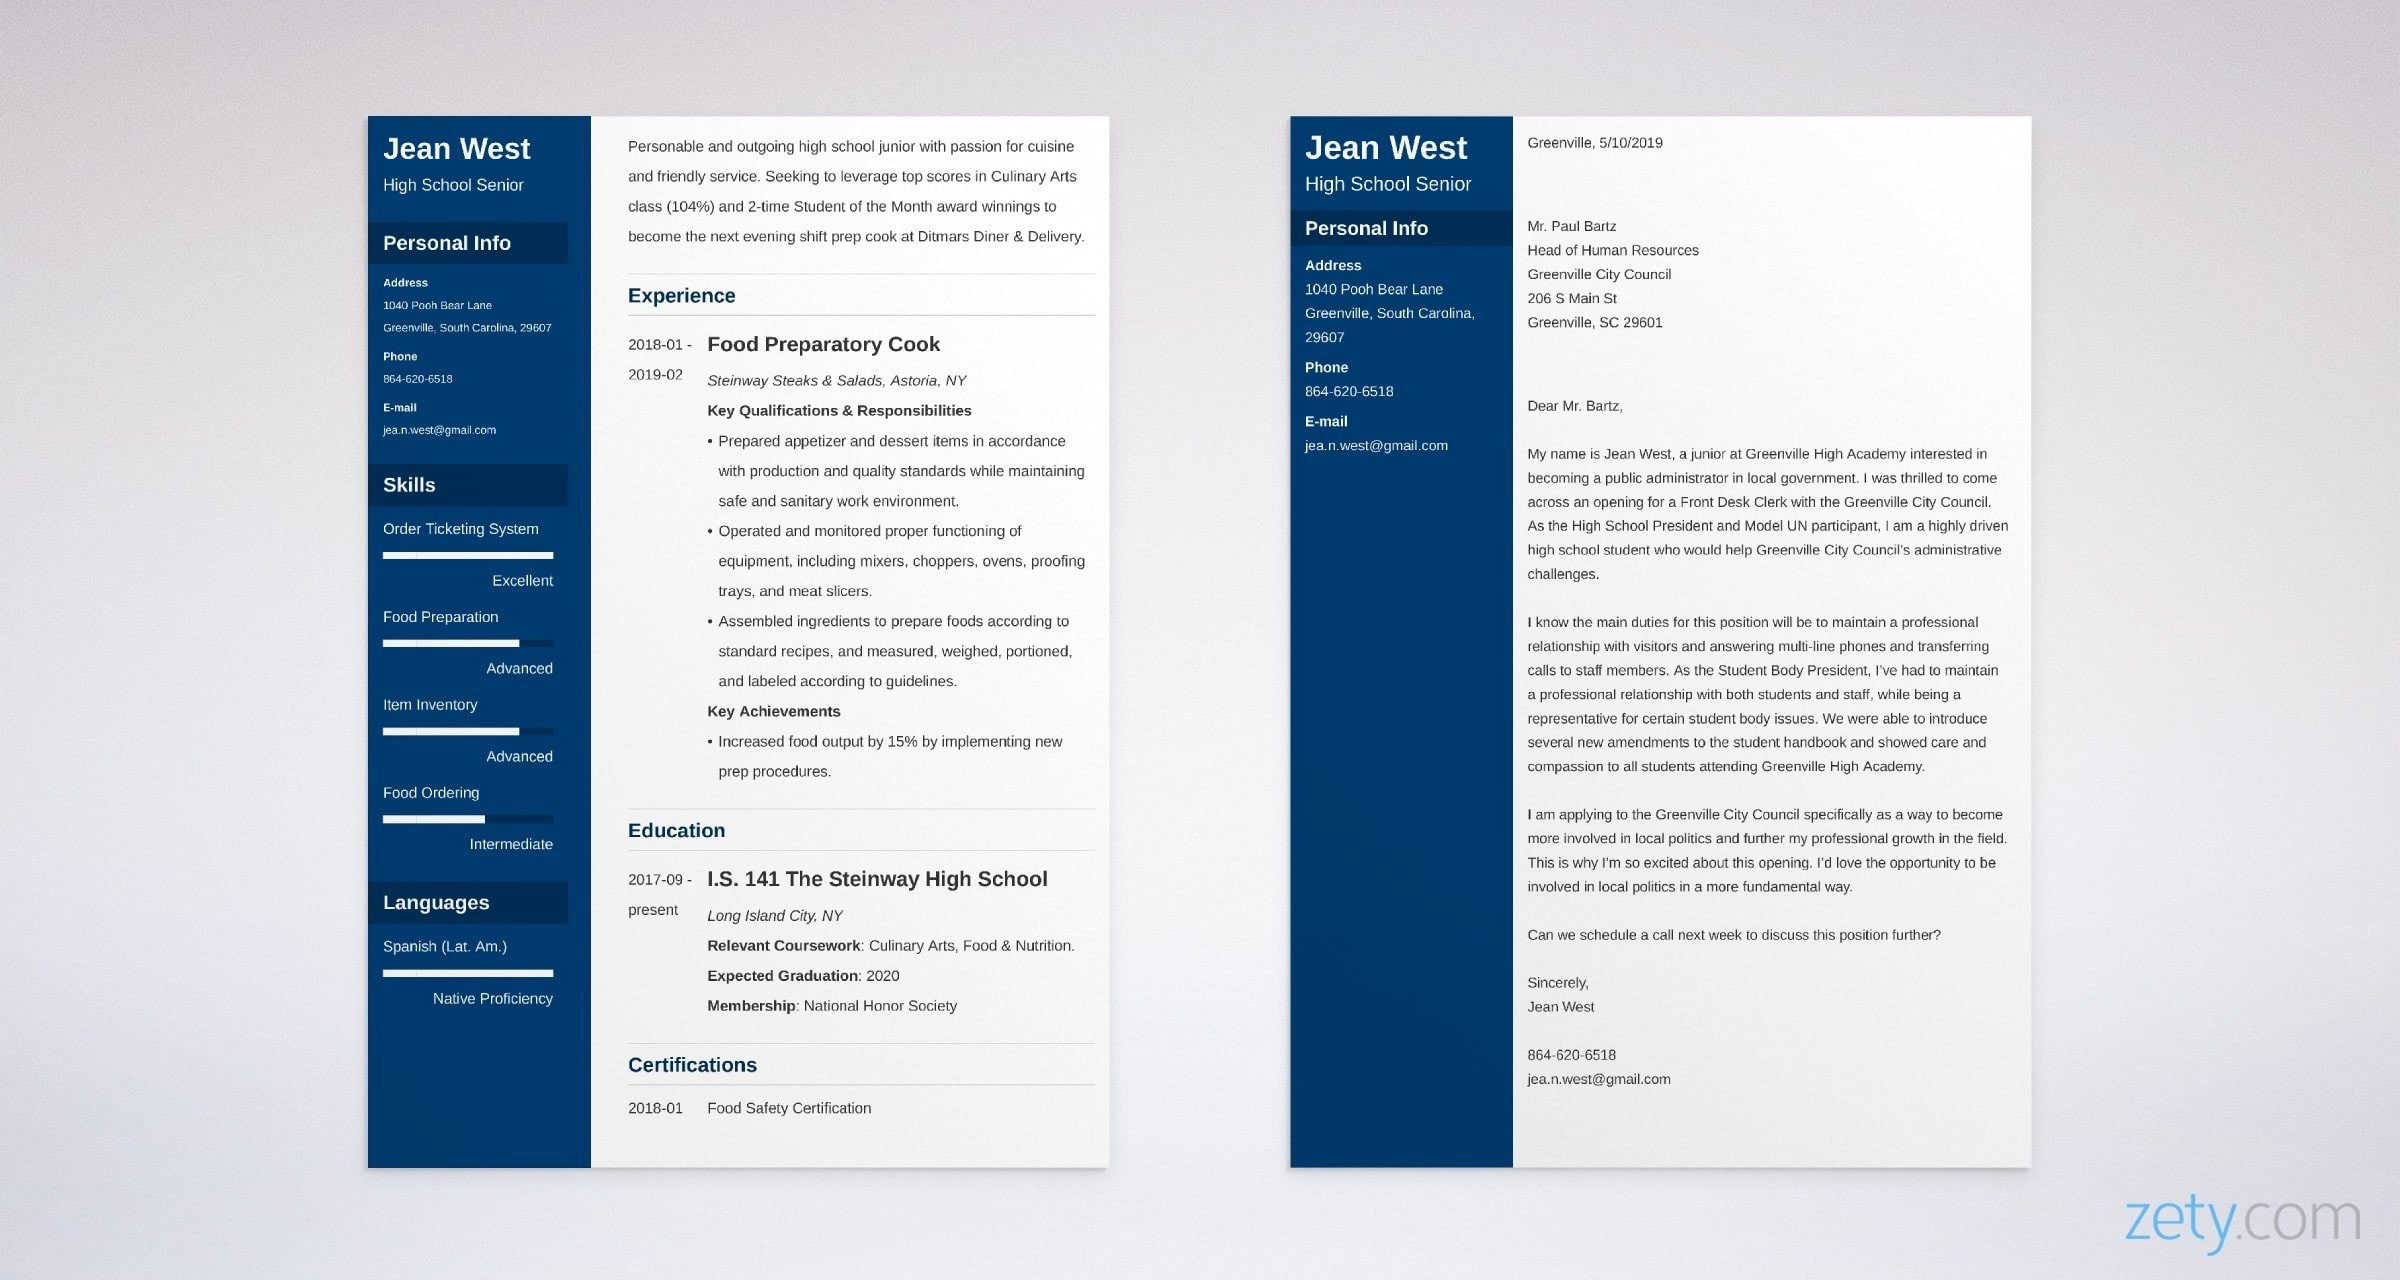 High School Resume Cover Letter Samples High School Cover Letter: Samples, Proper format, & Guide